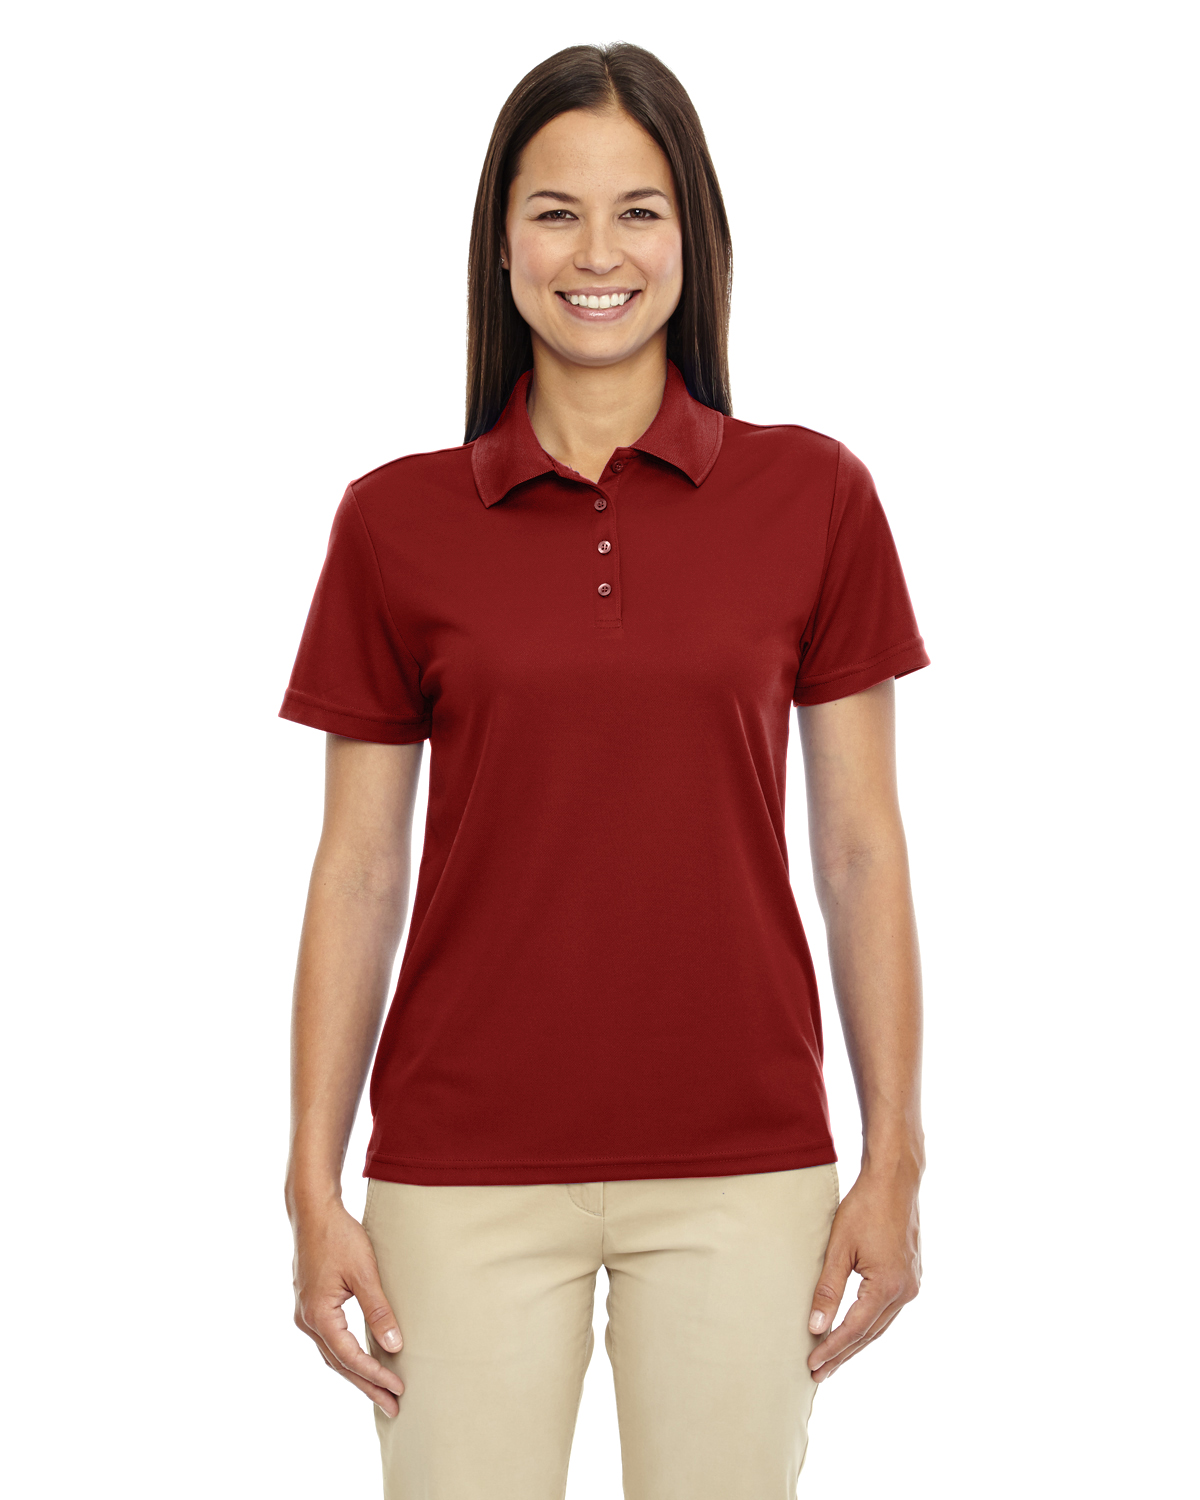 maroon polo shirt for women